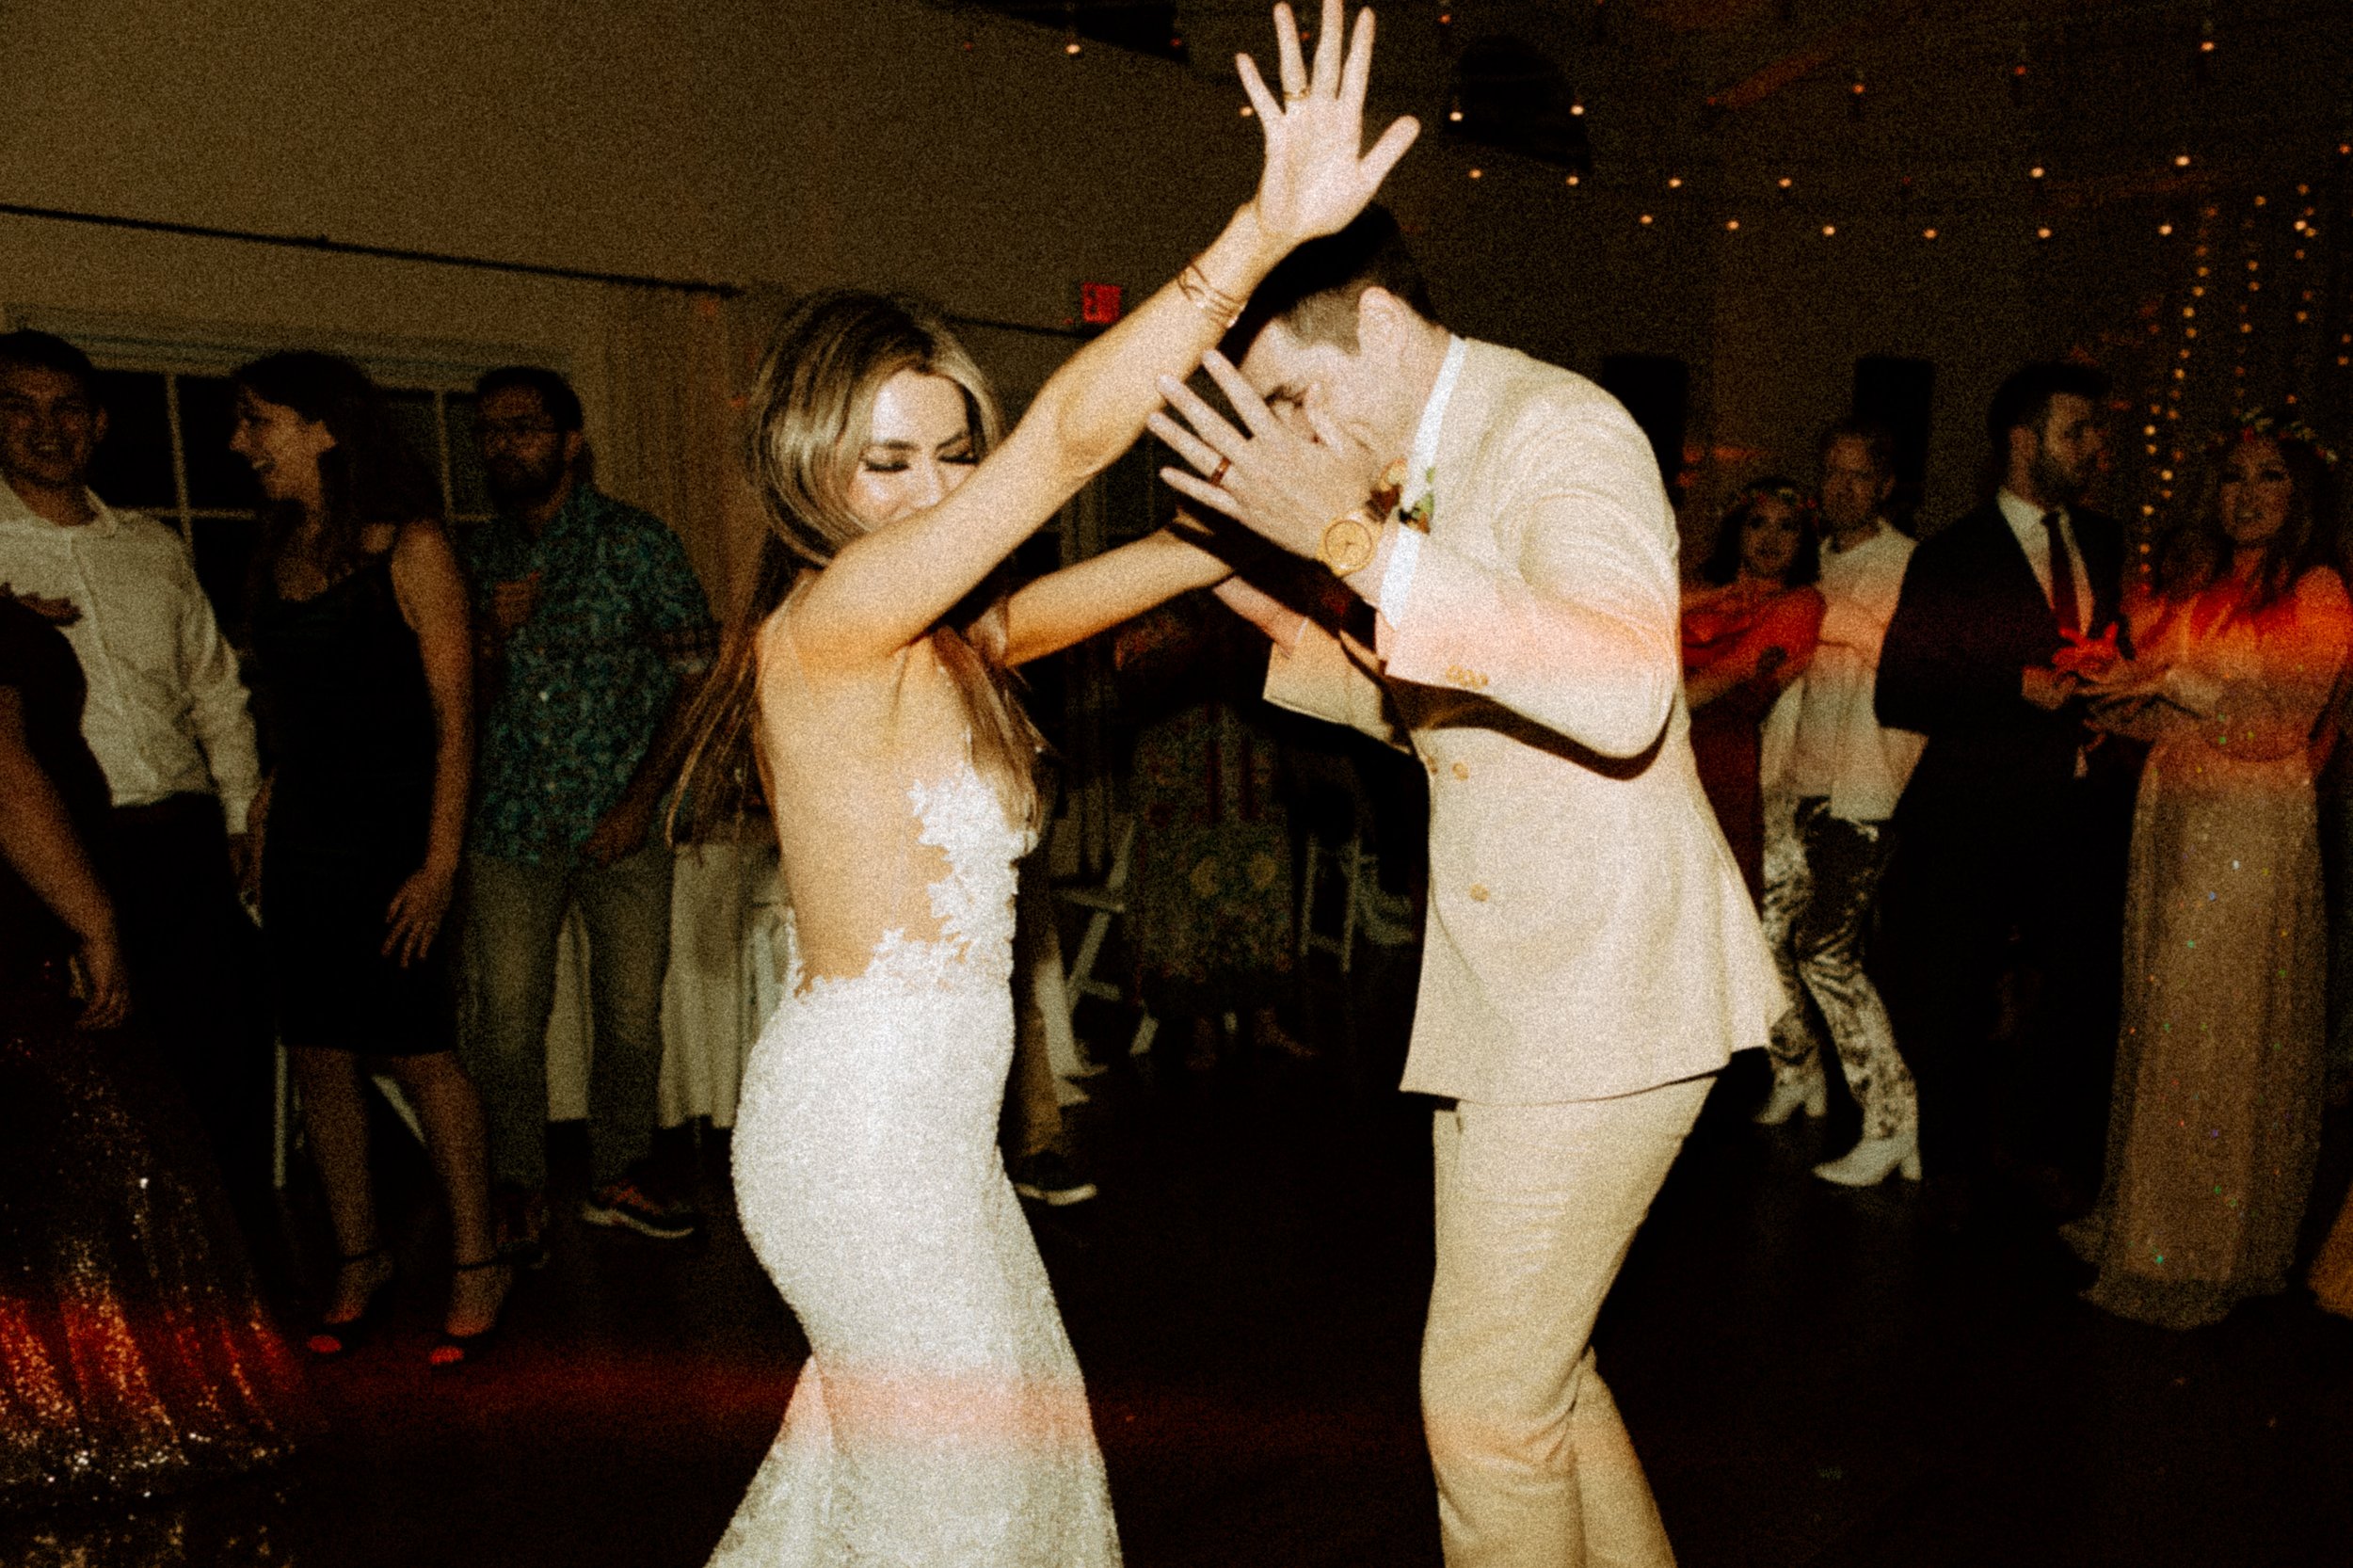 Sydney + Austin's 70s Disco Wedding at the Thursday Club - San Diego Wedding Photographer - FILM EDITS-77.jpg